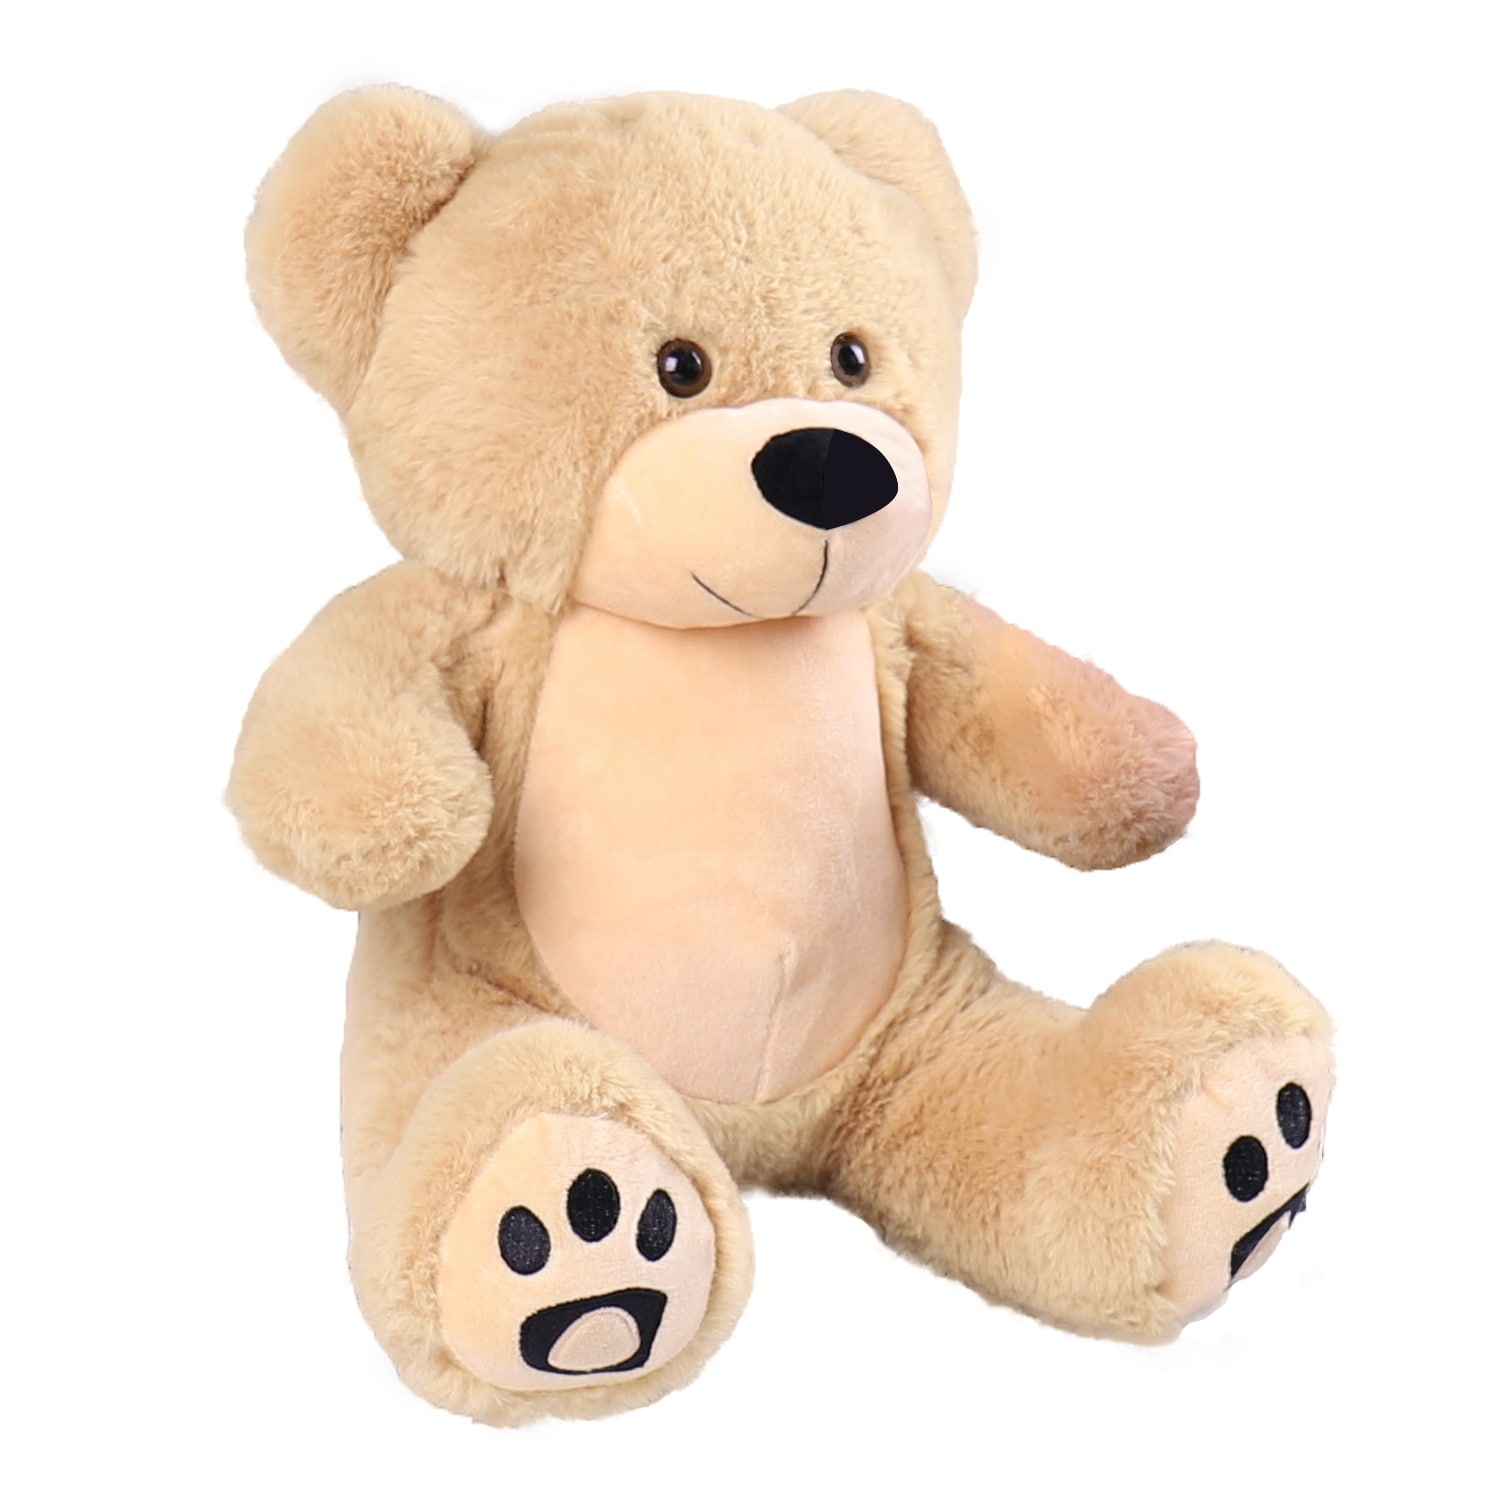 yellow teddy bear stuffed animal